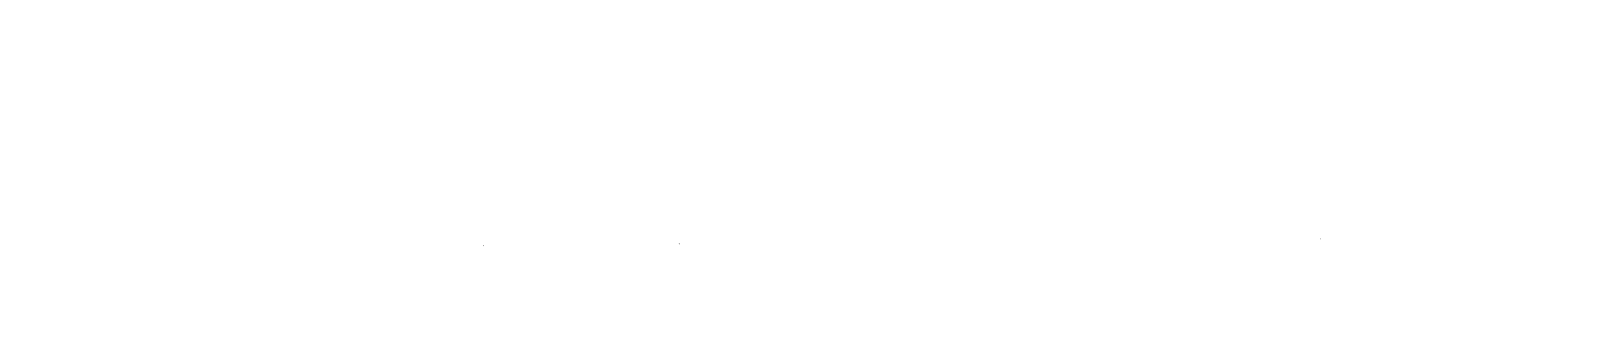 International Incentive Travel DMC